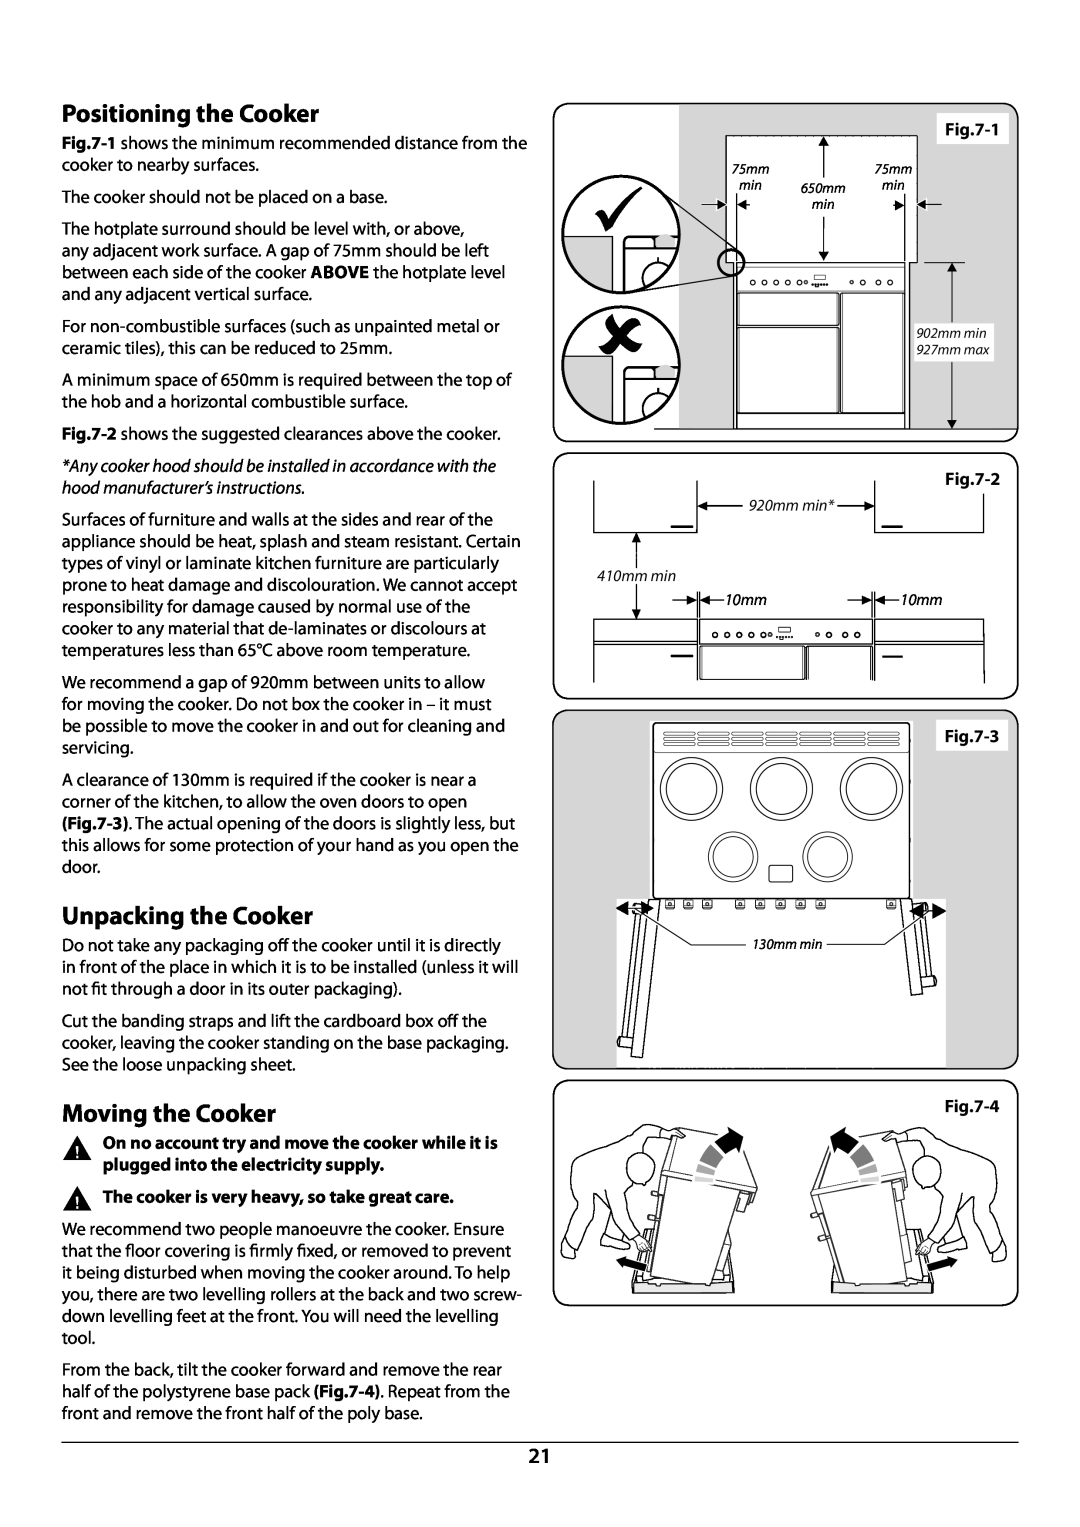 Rangemaster U109987 - 01 manual Positioning the Cooker, Unpacking the Cooker, Moving the Cooker 